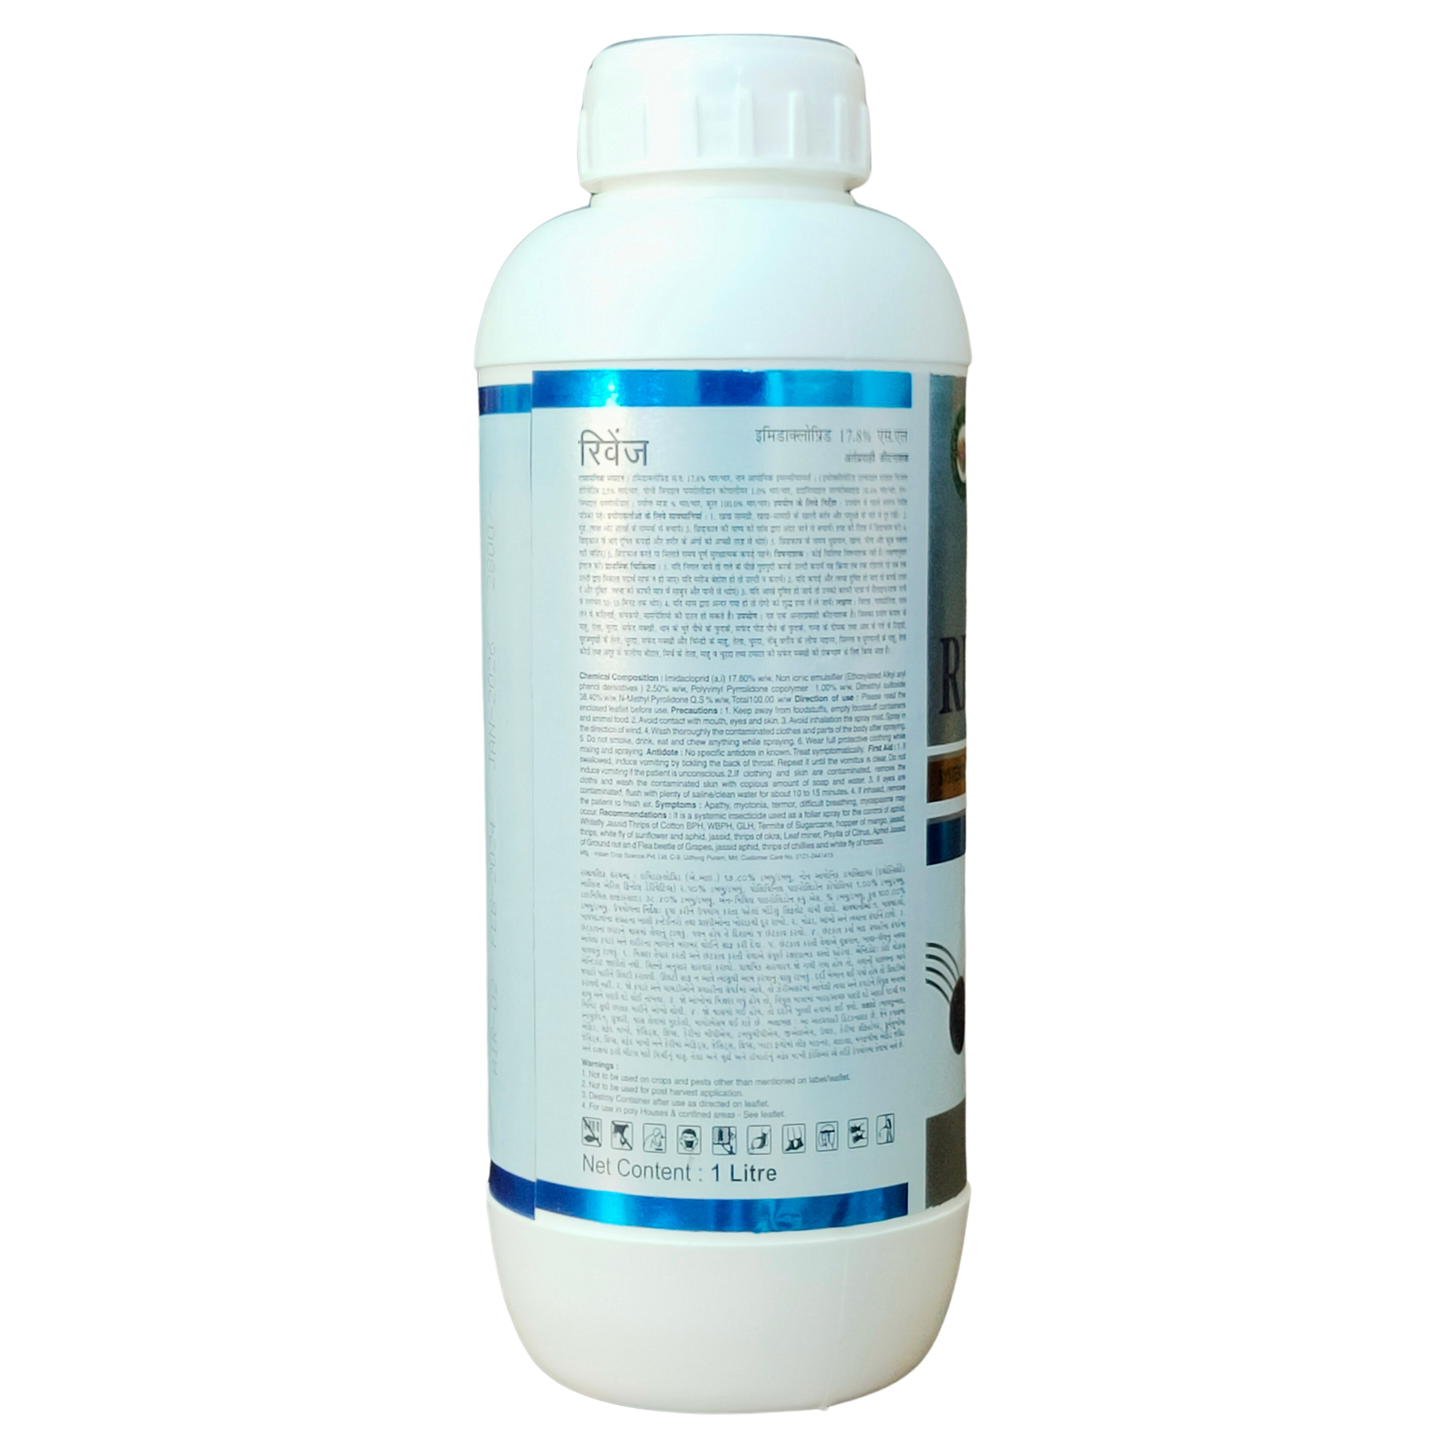 Revange - Imidacloprid 17.8% SL Insecticide